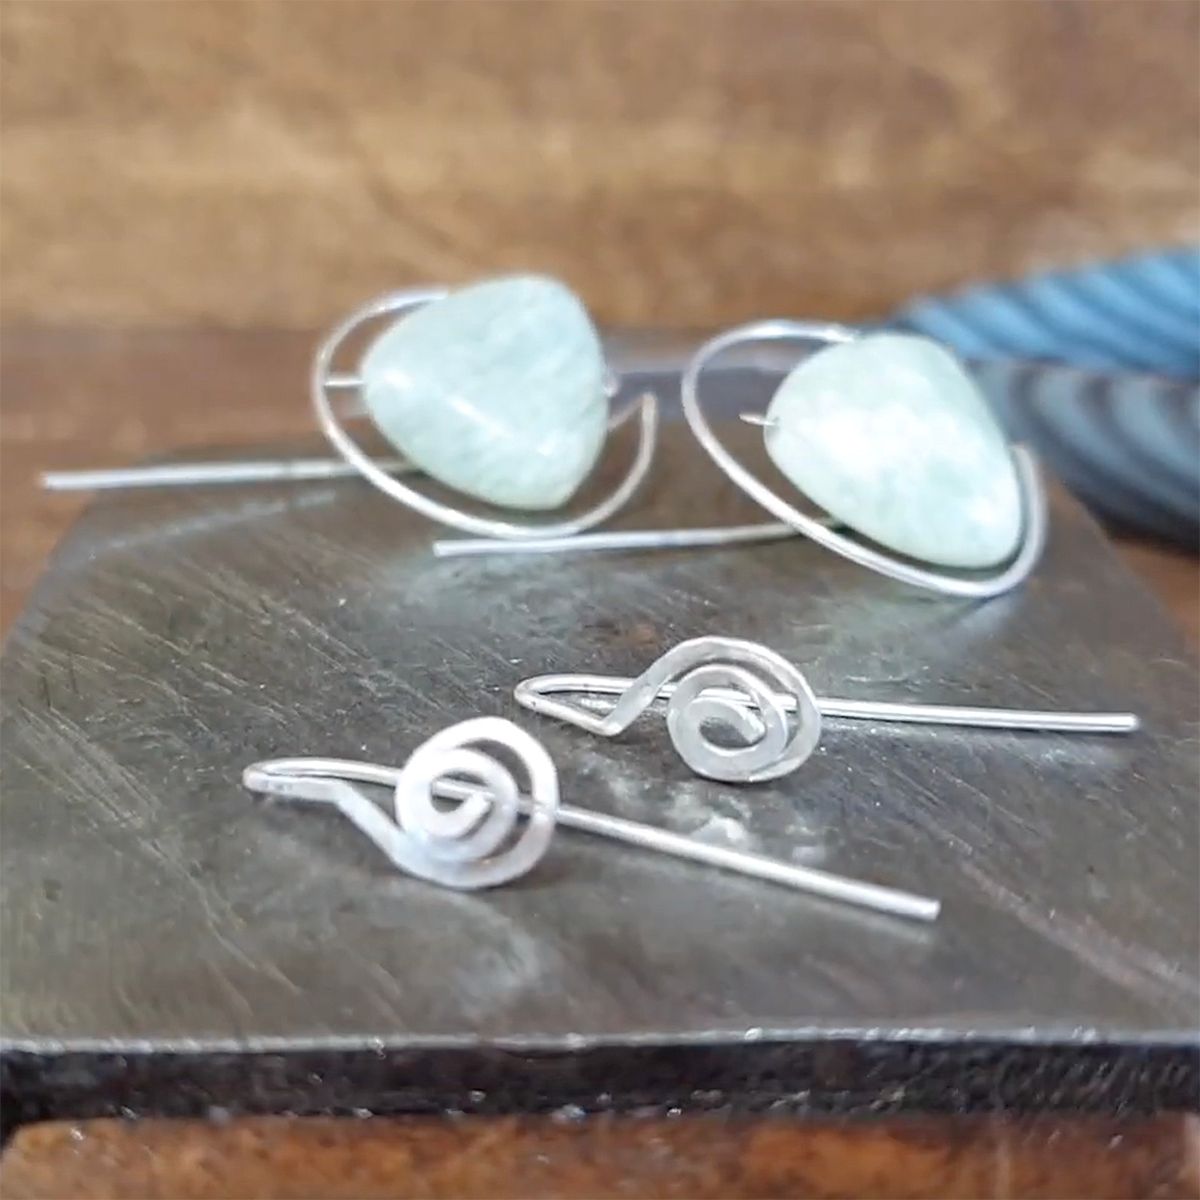 Making 7 Types of Earring Backs: A Silversmithing Tip 